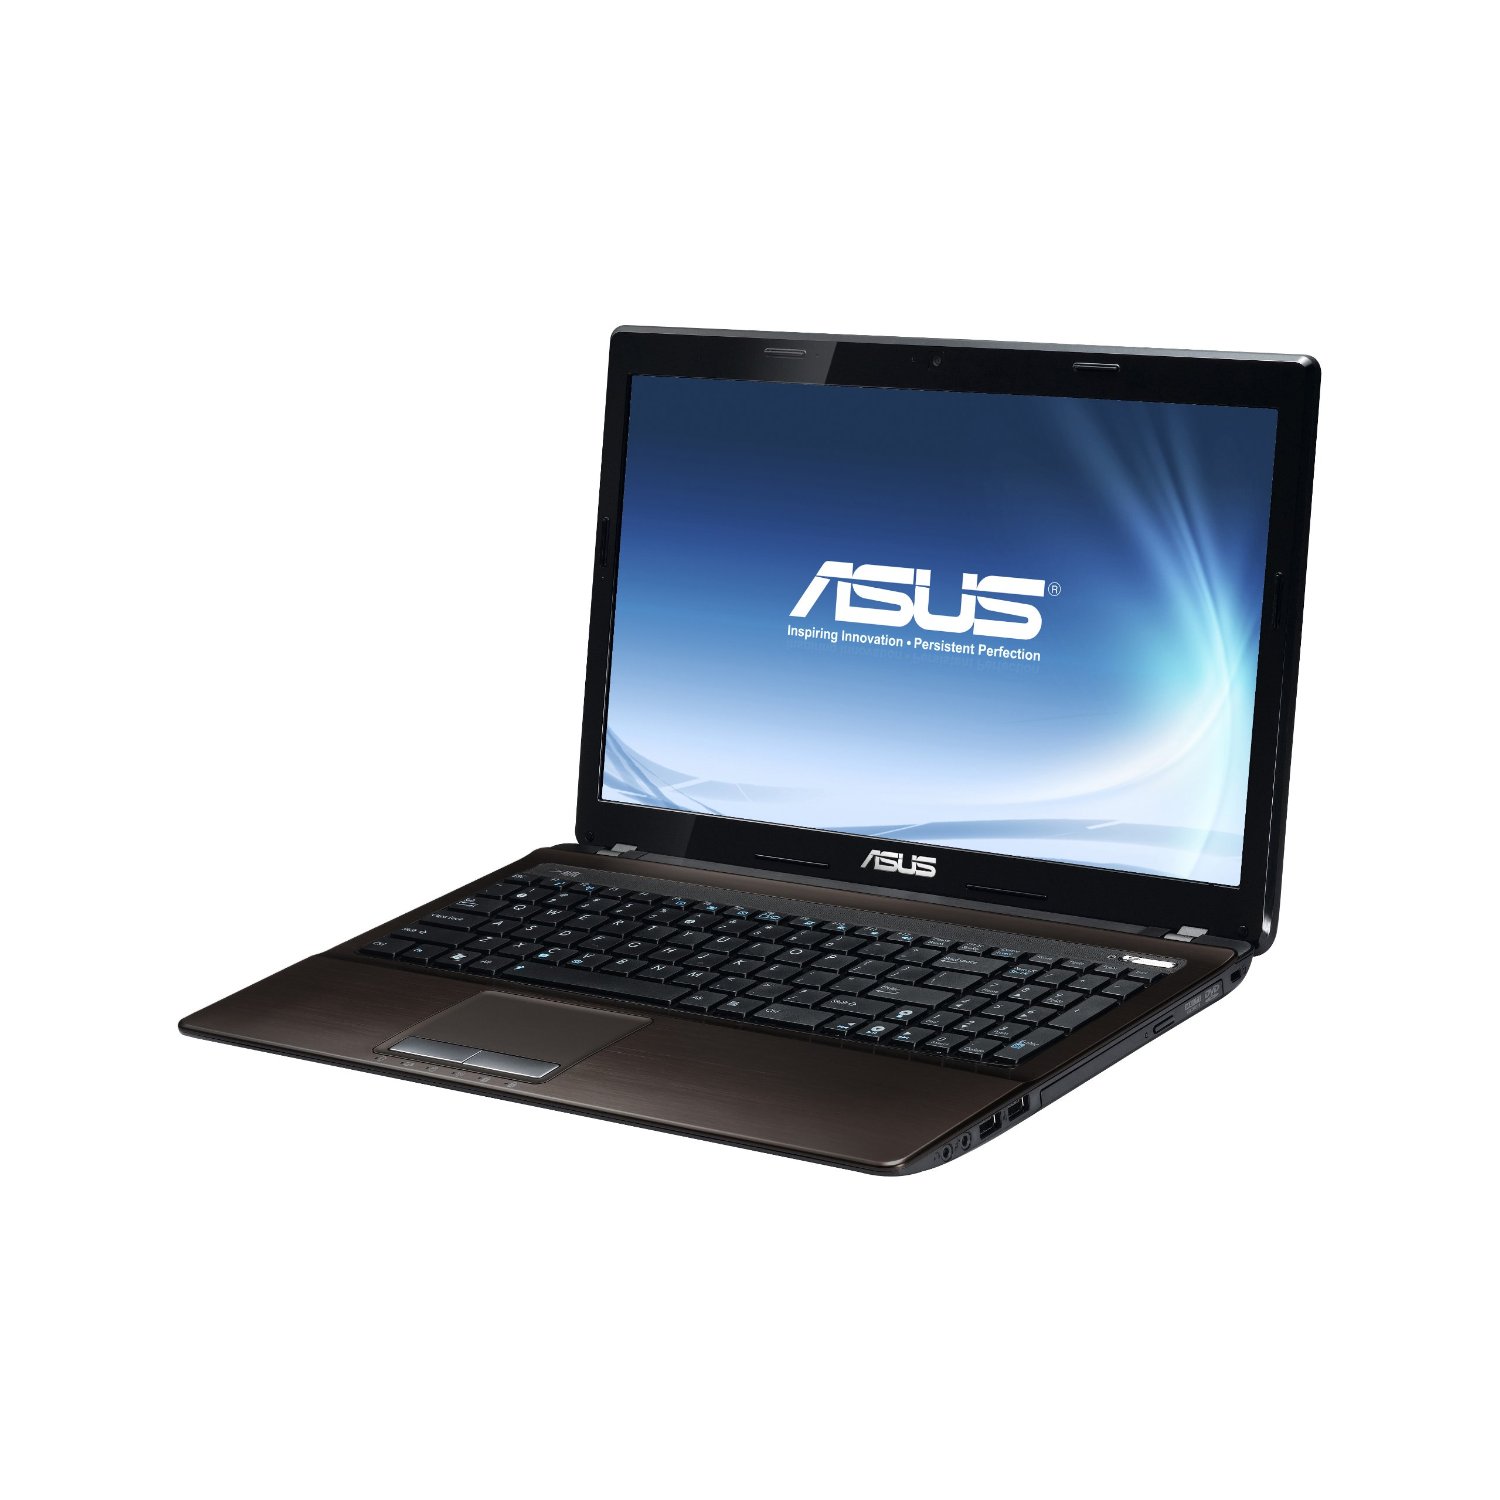 Asus A53SJ Notebook